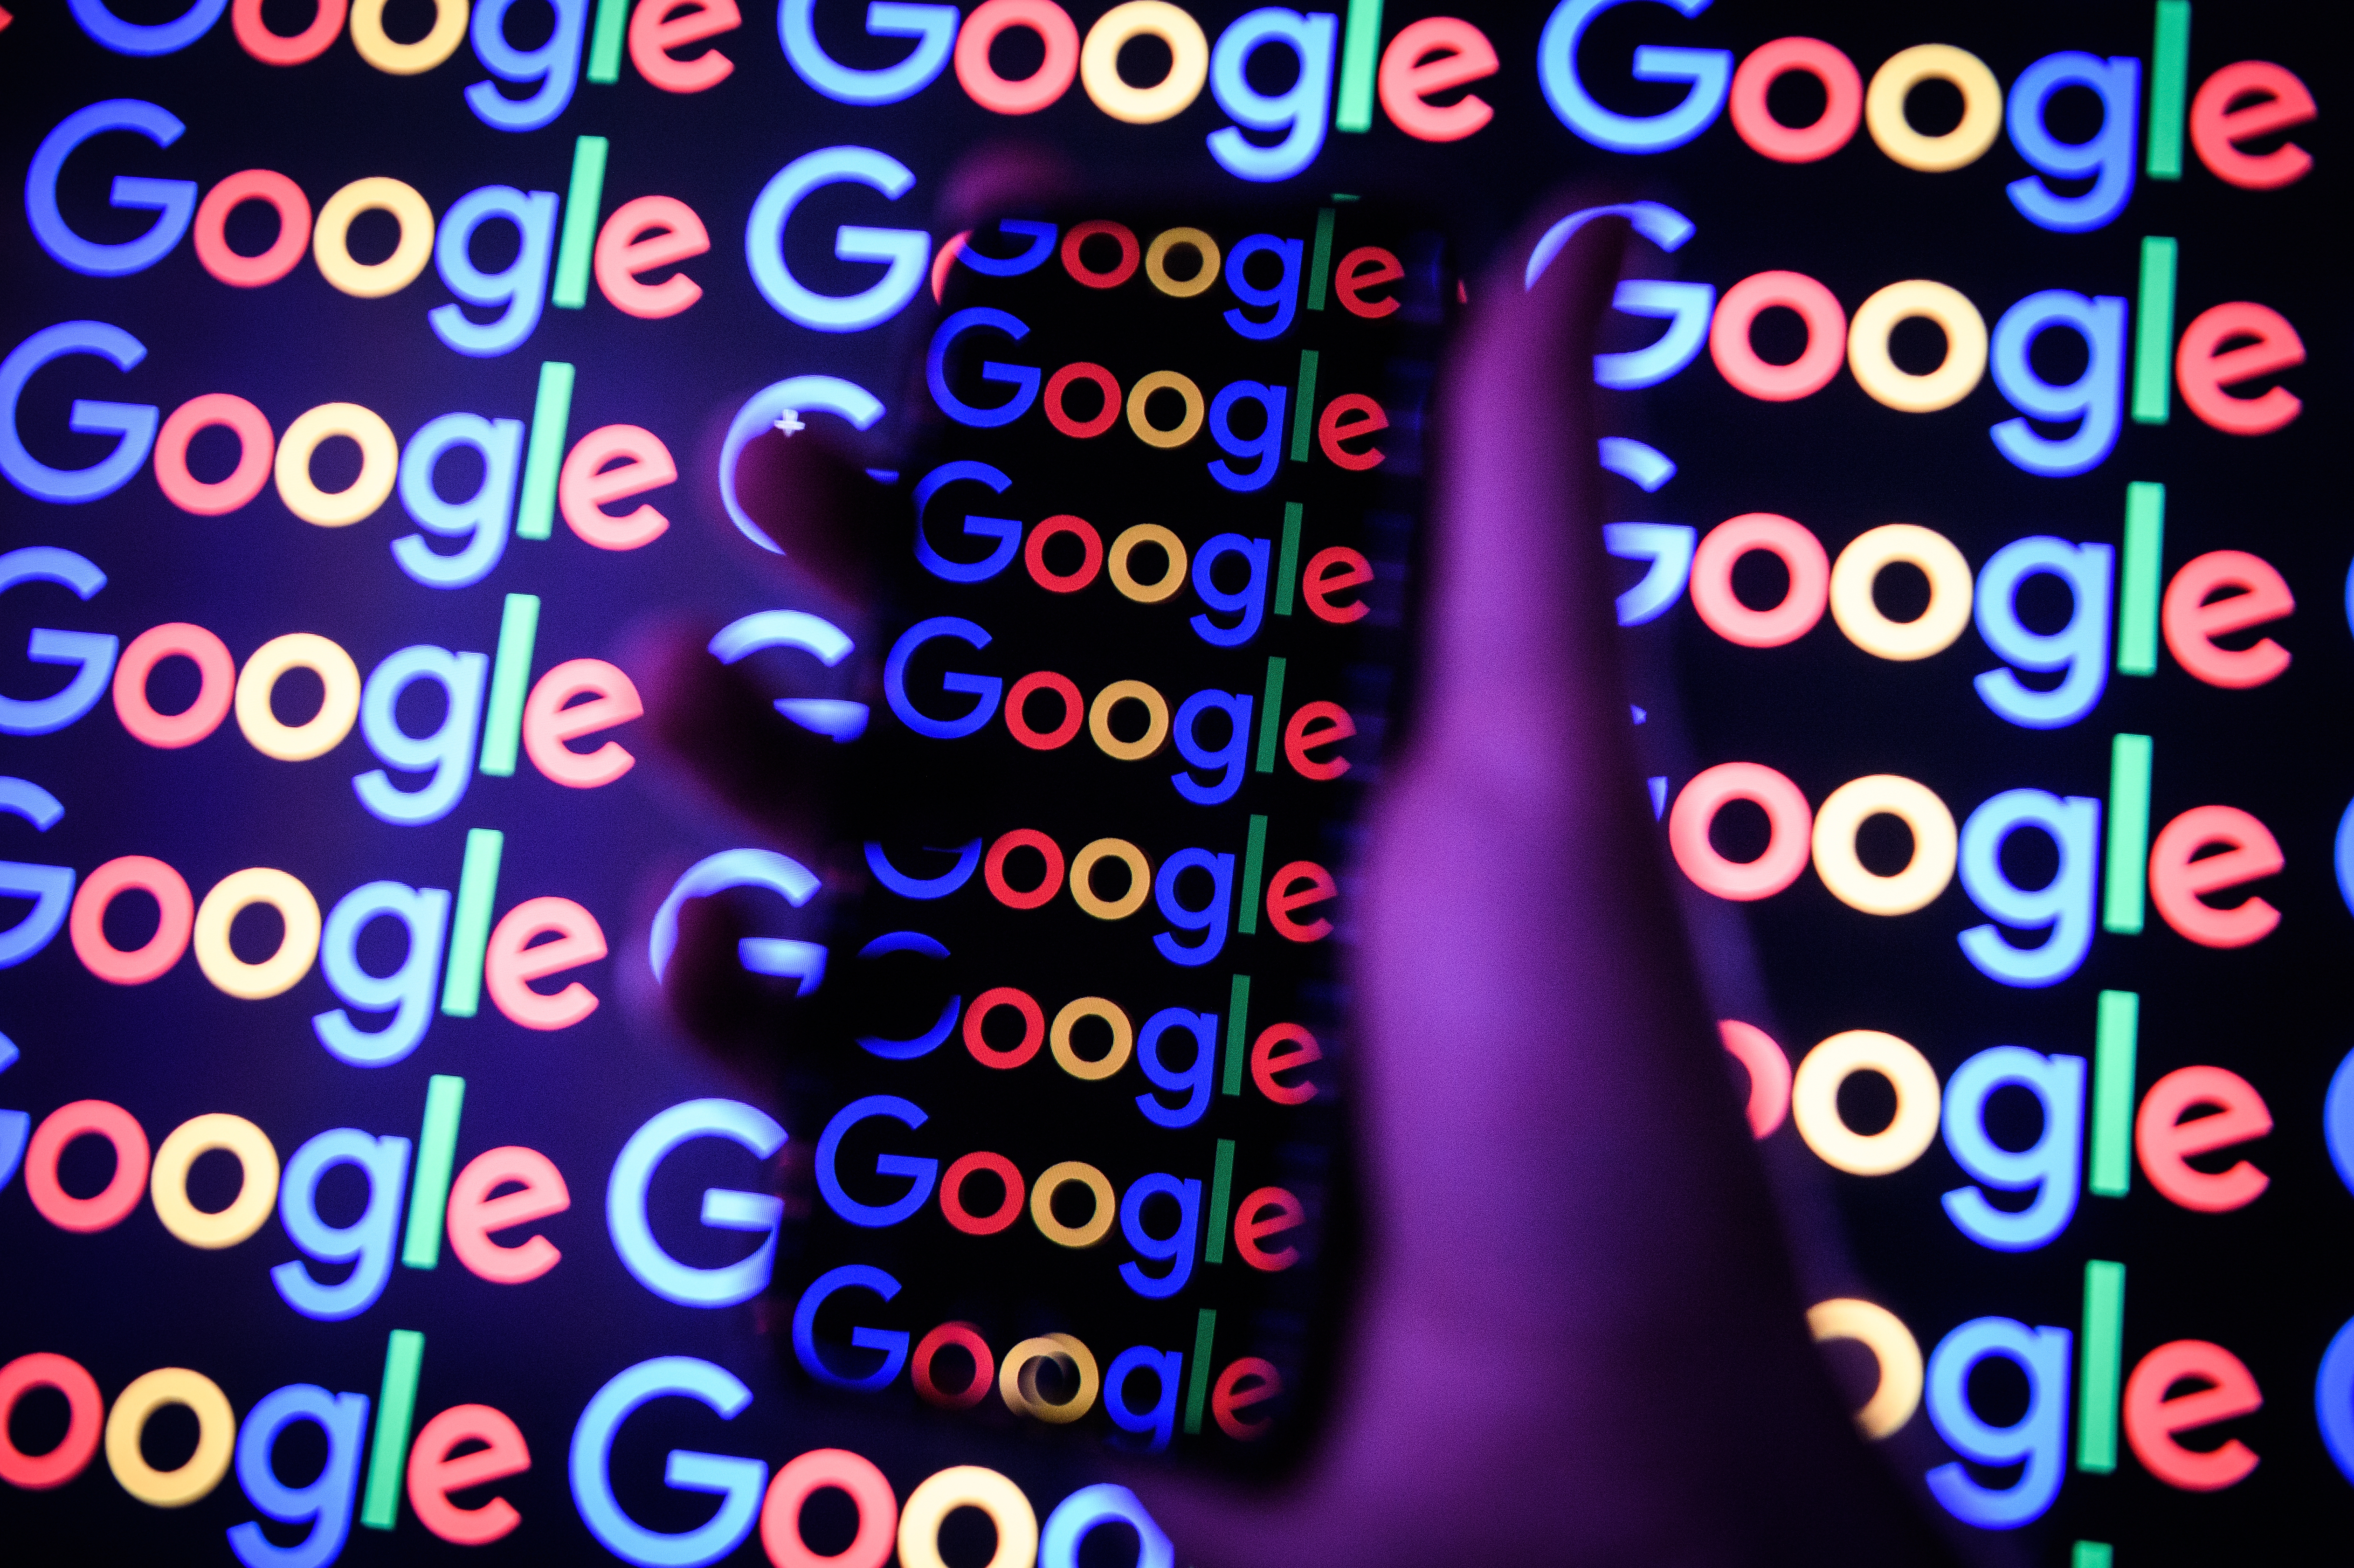 Google-Powered Monopoly Still Under Construction